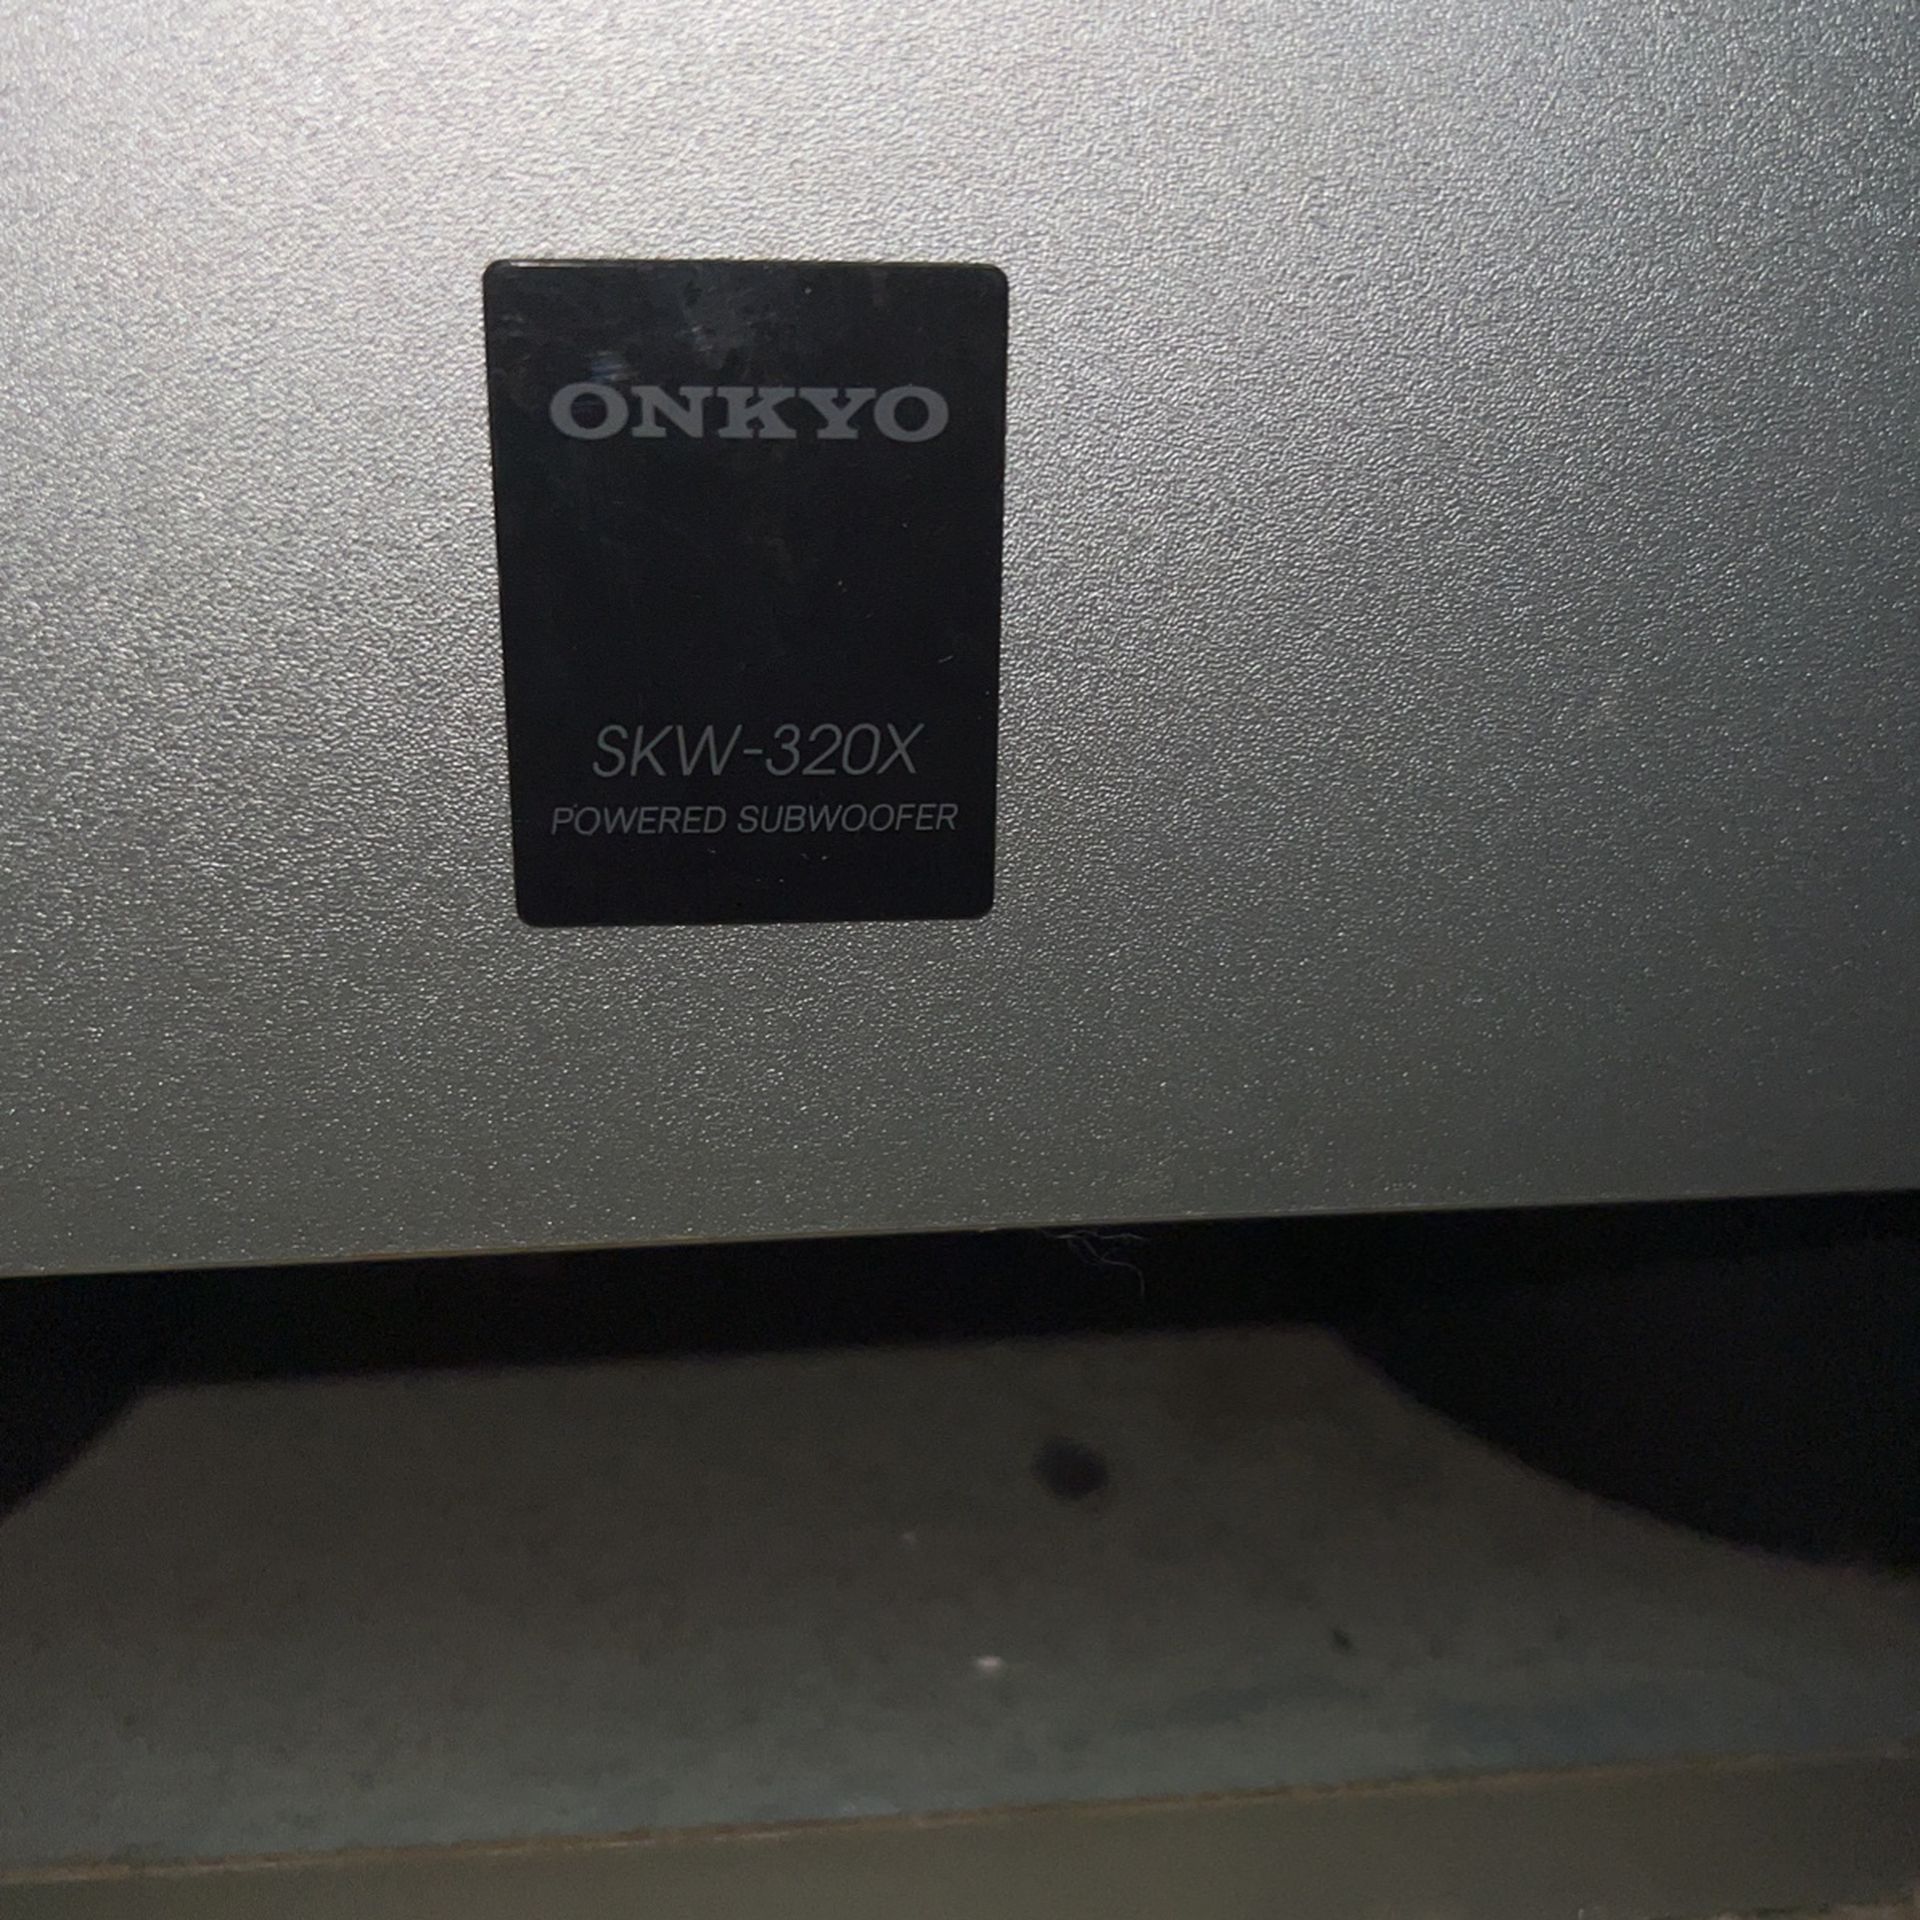 ONKYO SKW-320x subwoofer 